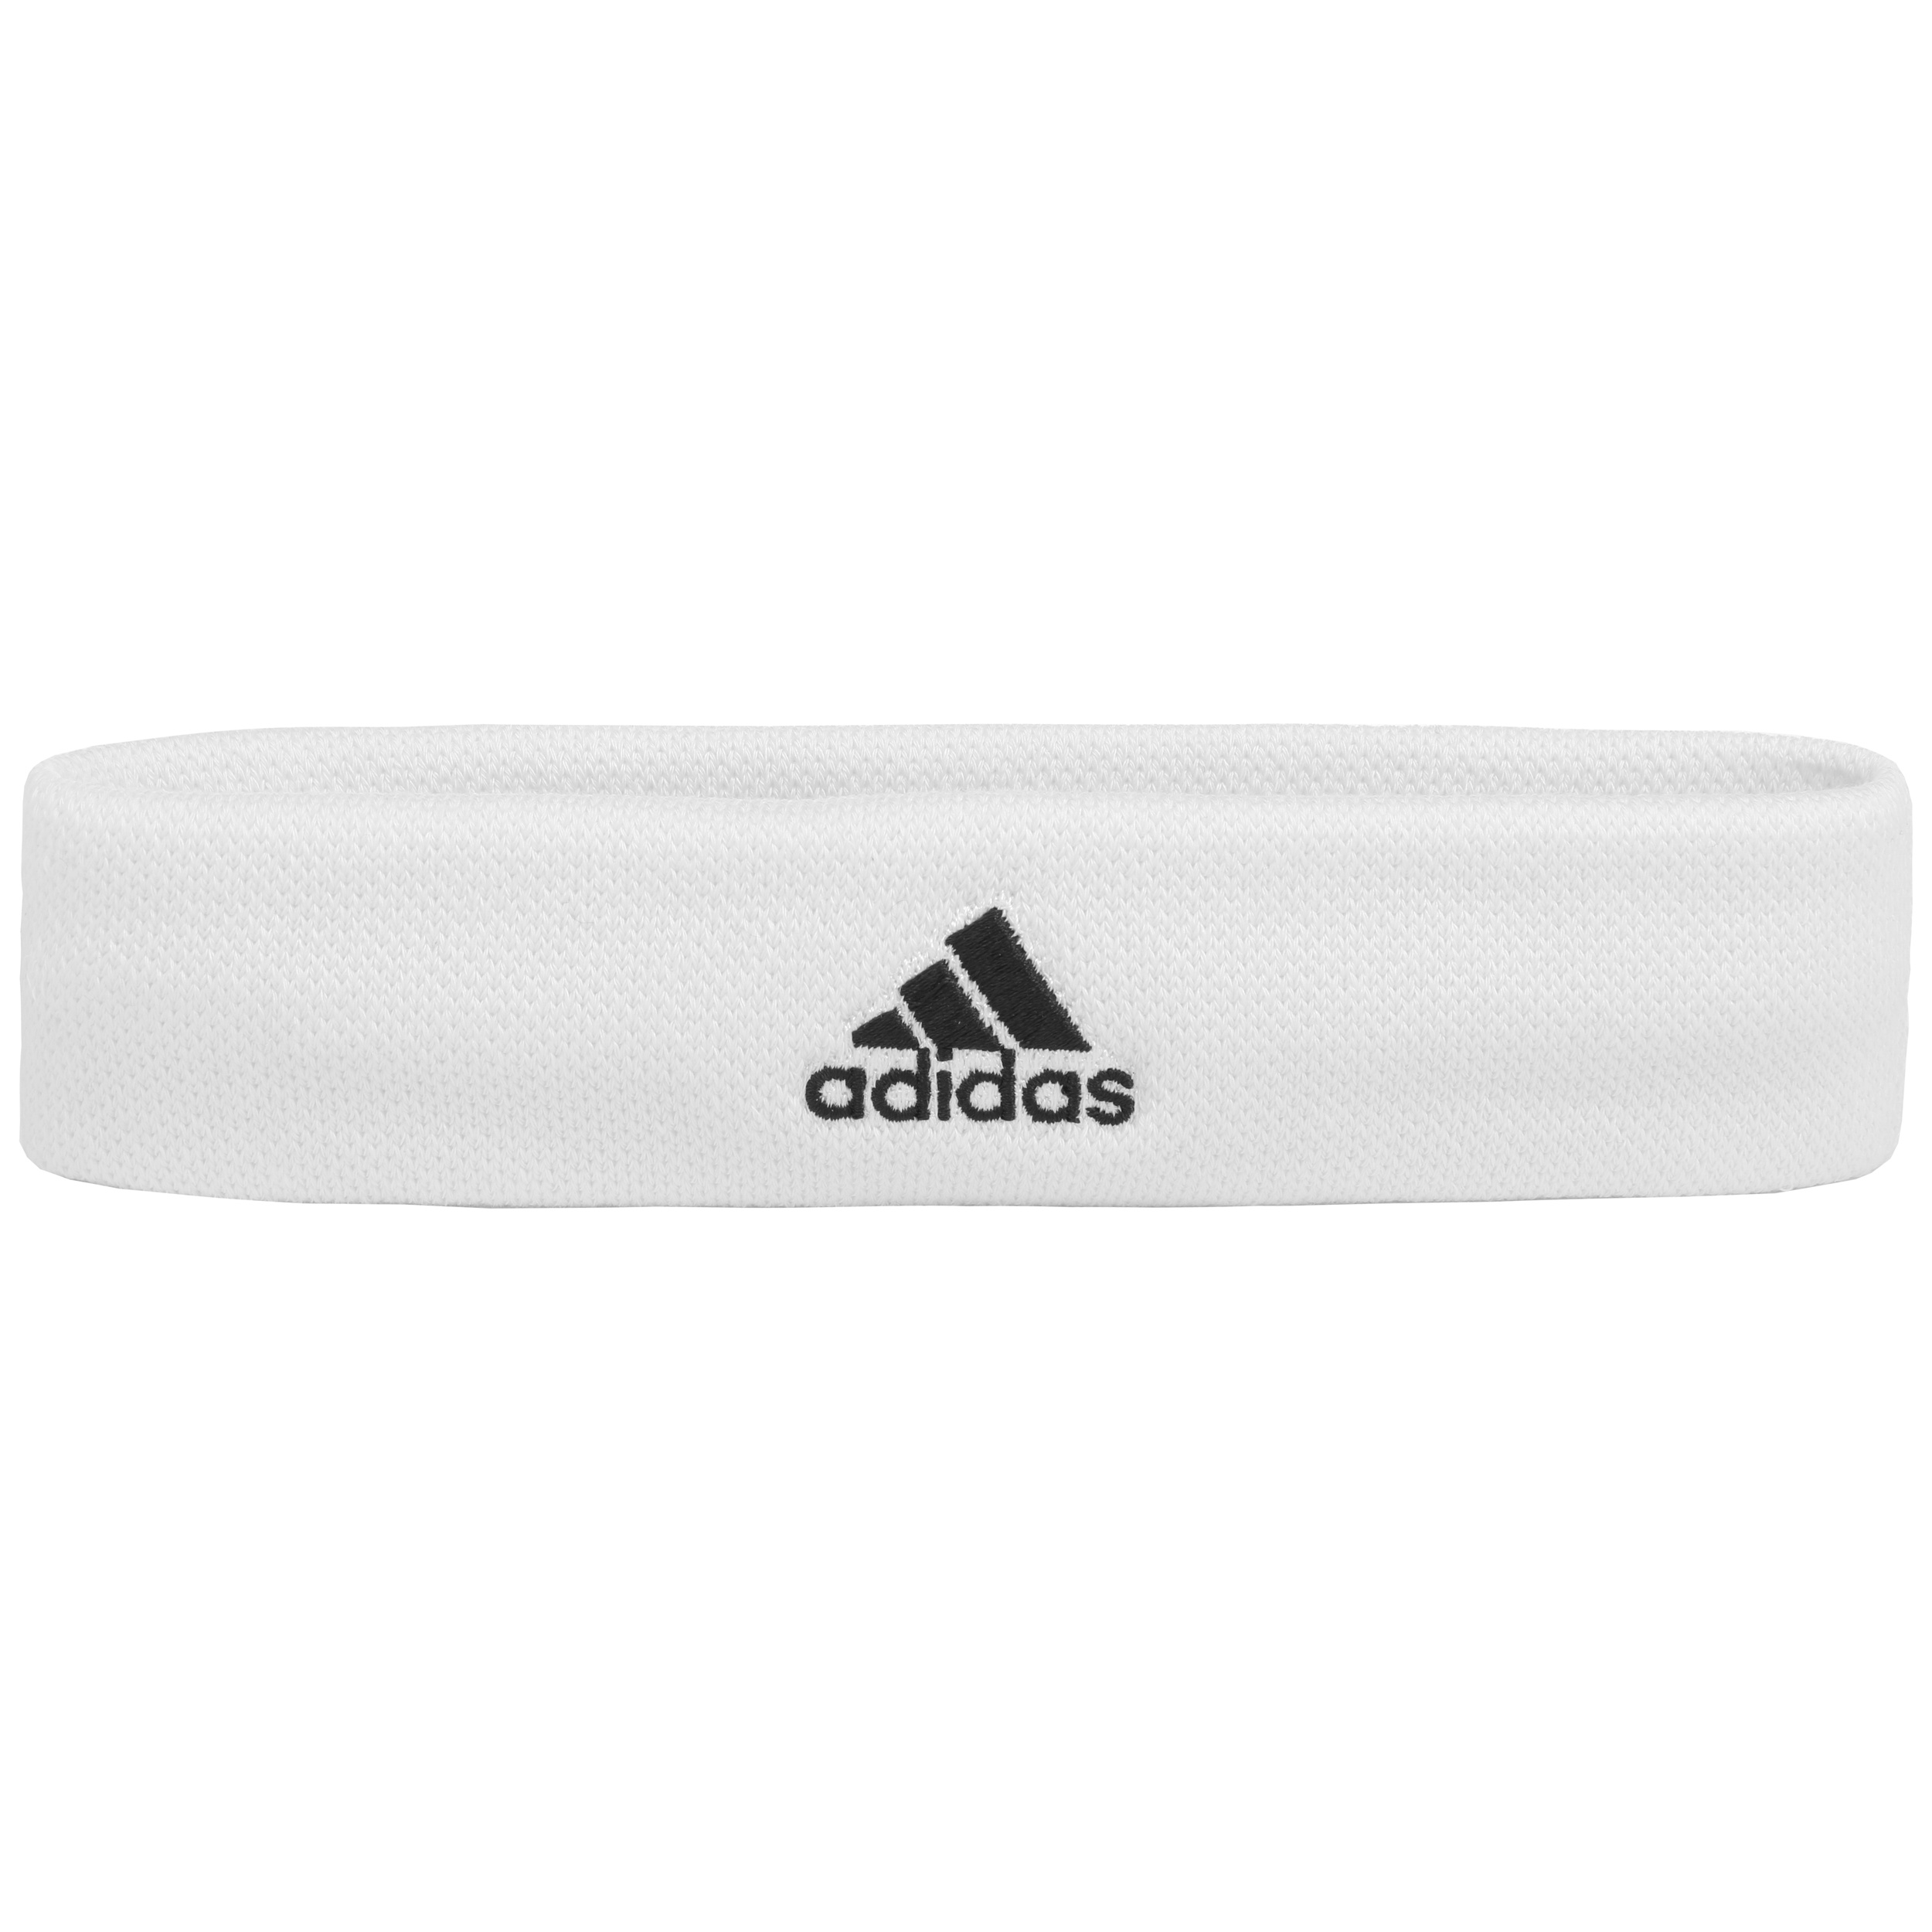 Tennis Headband by adidas - 14,95